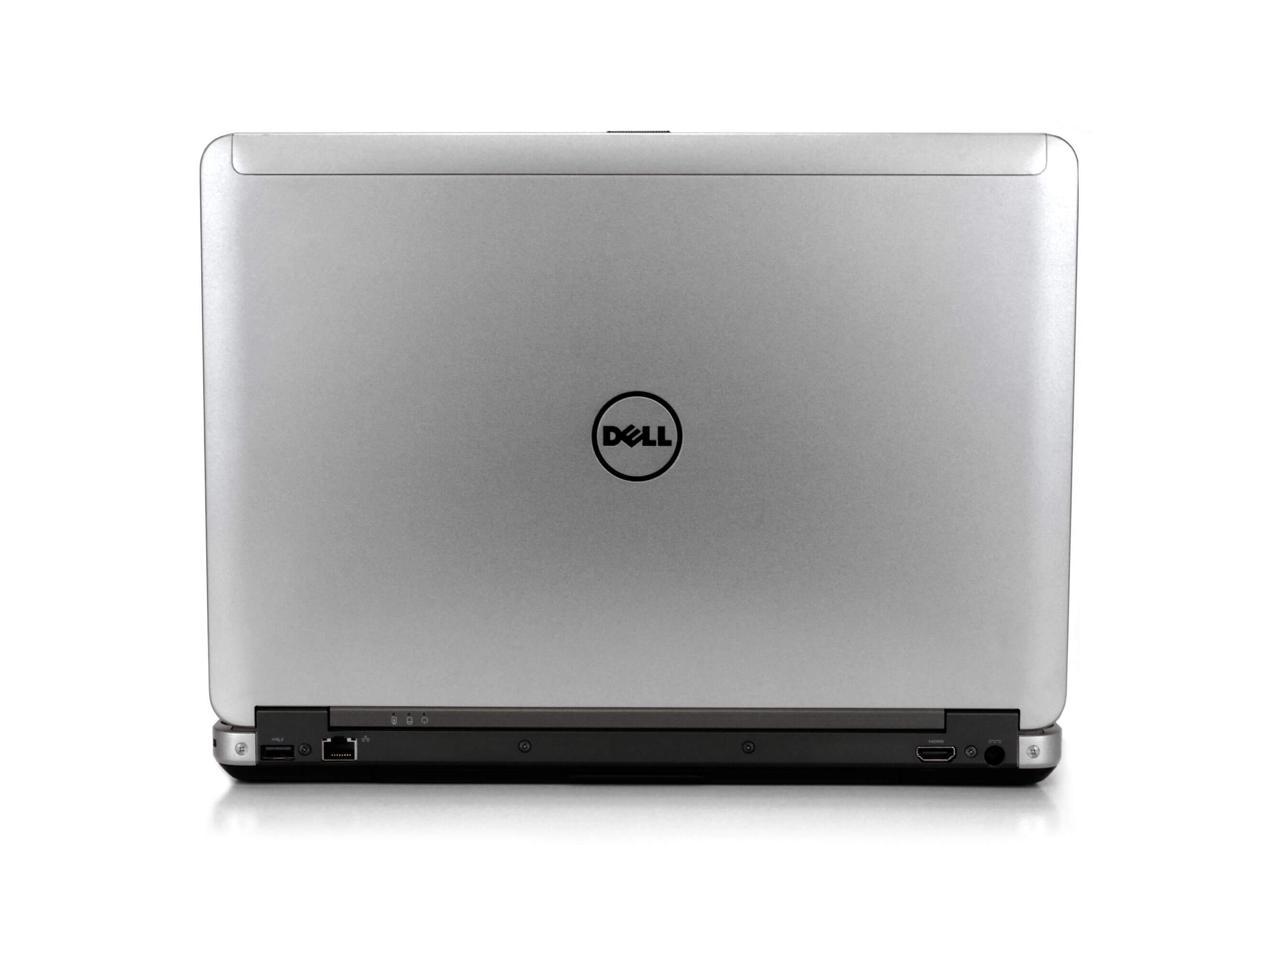 Dell Latitude E6440 Laptop Computer, 2.60 GHz Intel i5 Dual Core Gen 4, 4GB DDR3 RAM, 500GB SATA Hard Drive, Windows 10 Home 64 Bit, 14" Screen (B GRADE)